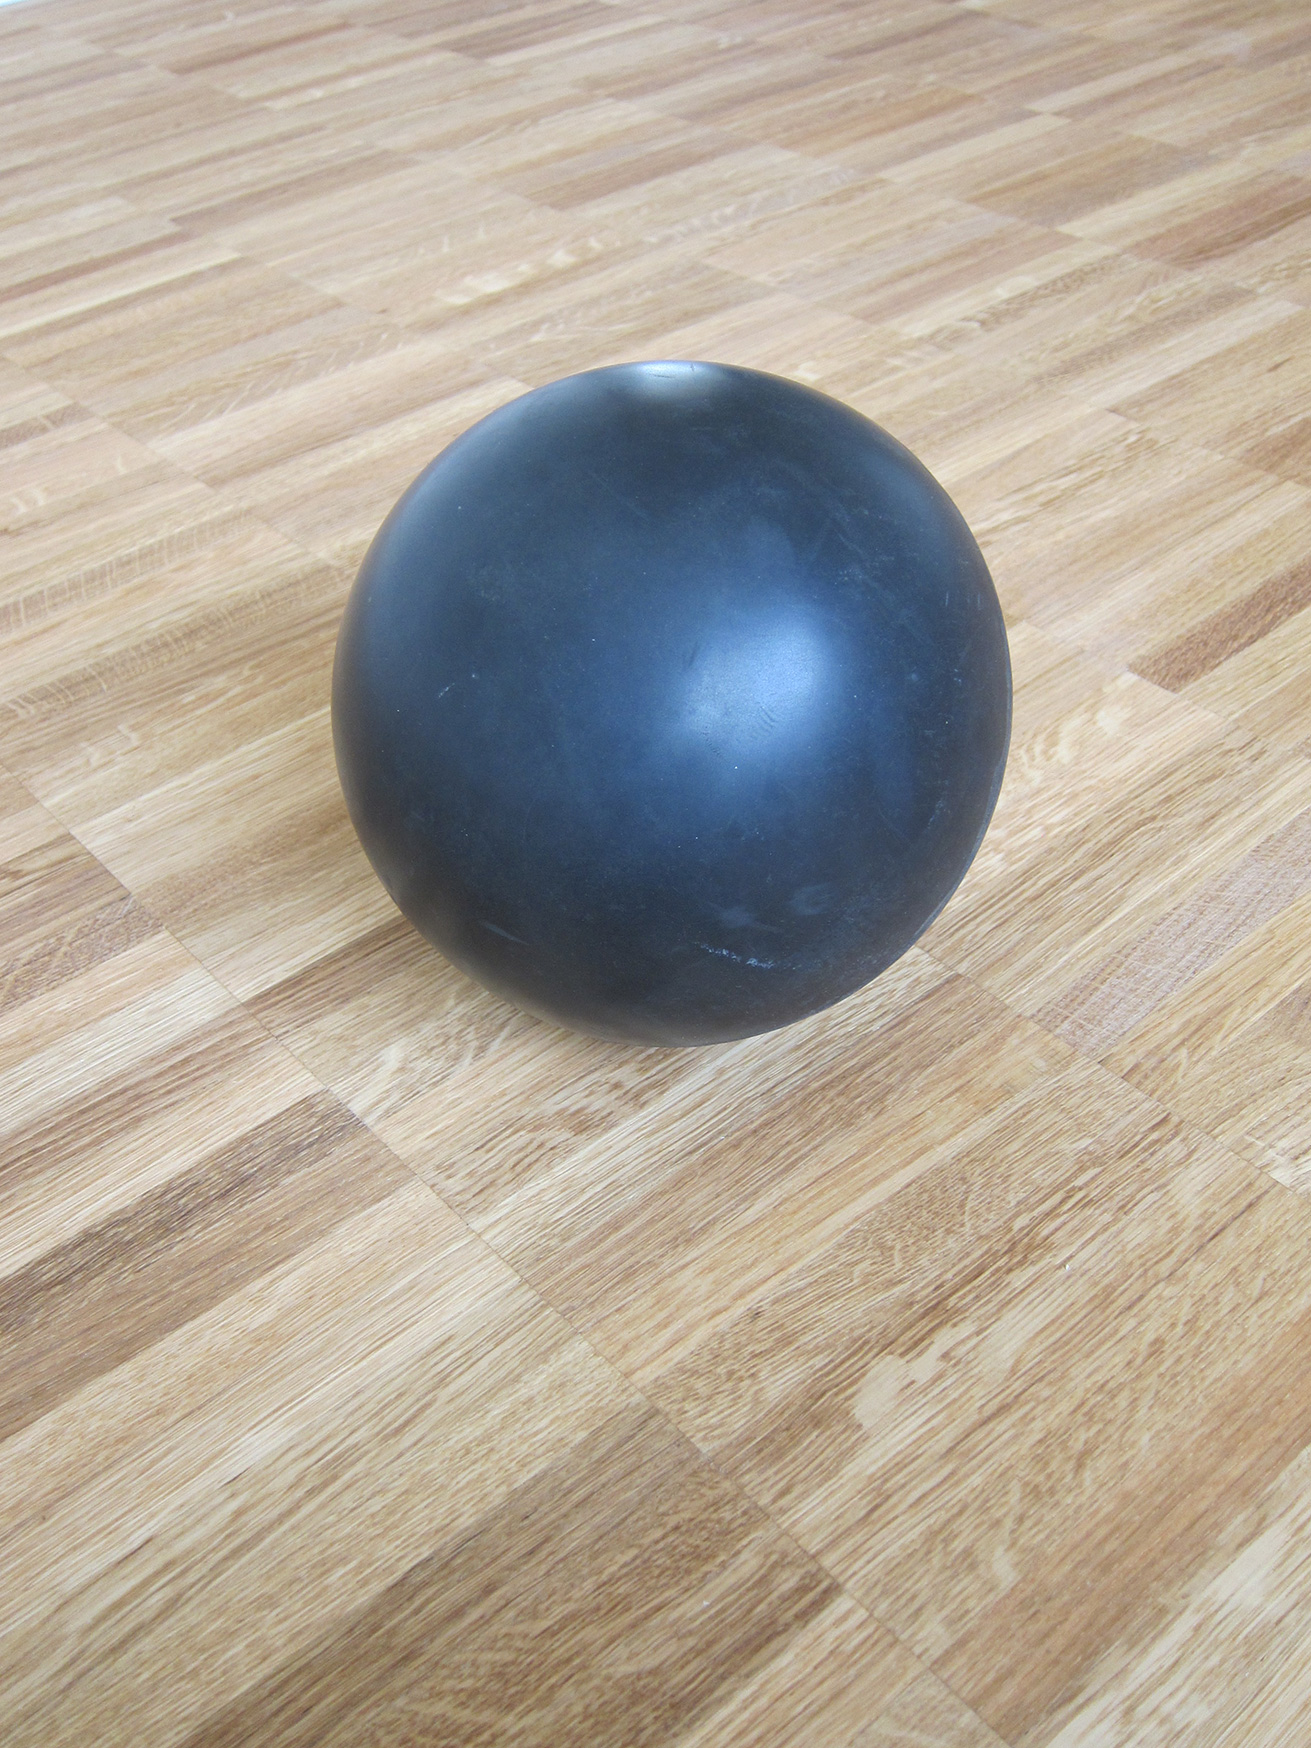 Japanese rubber ball